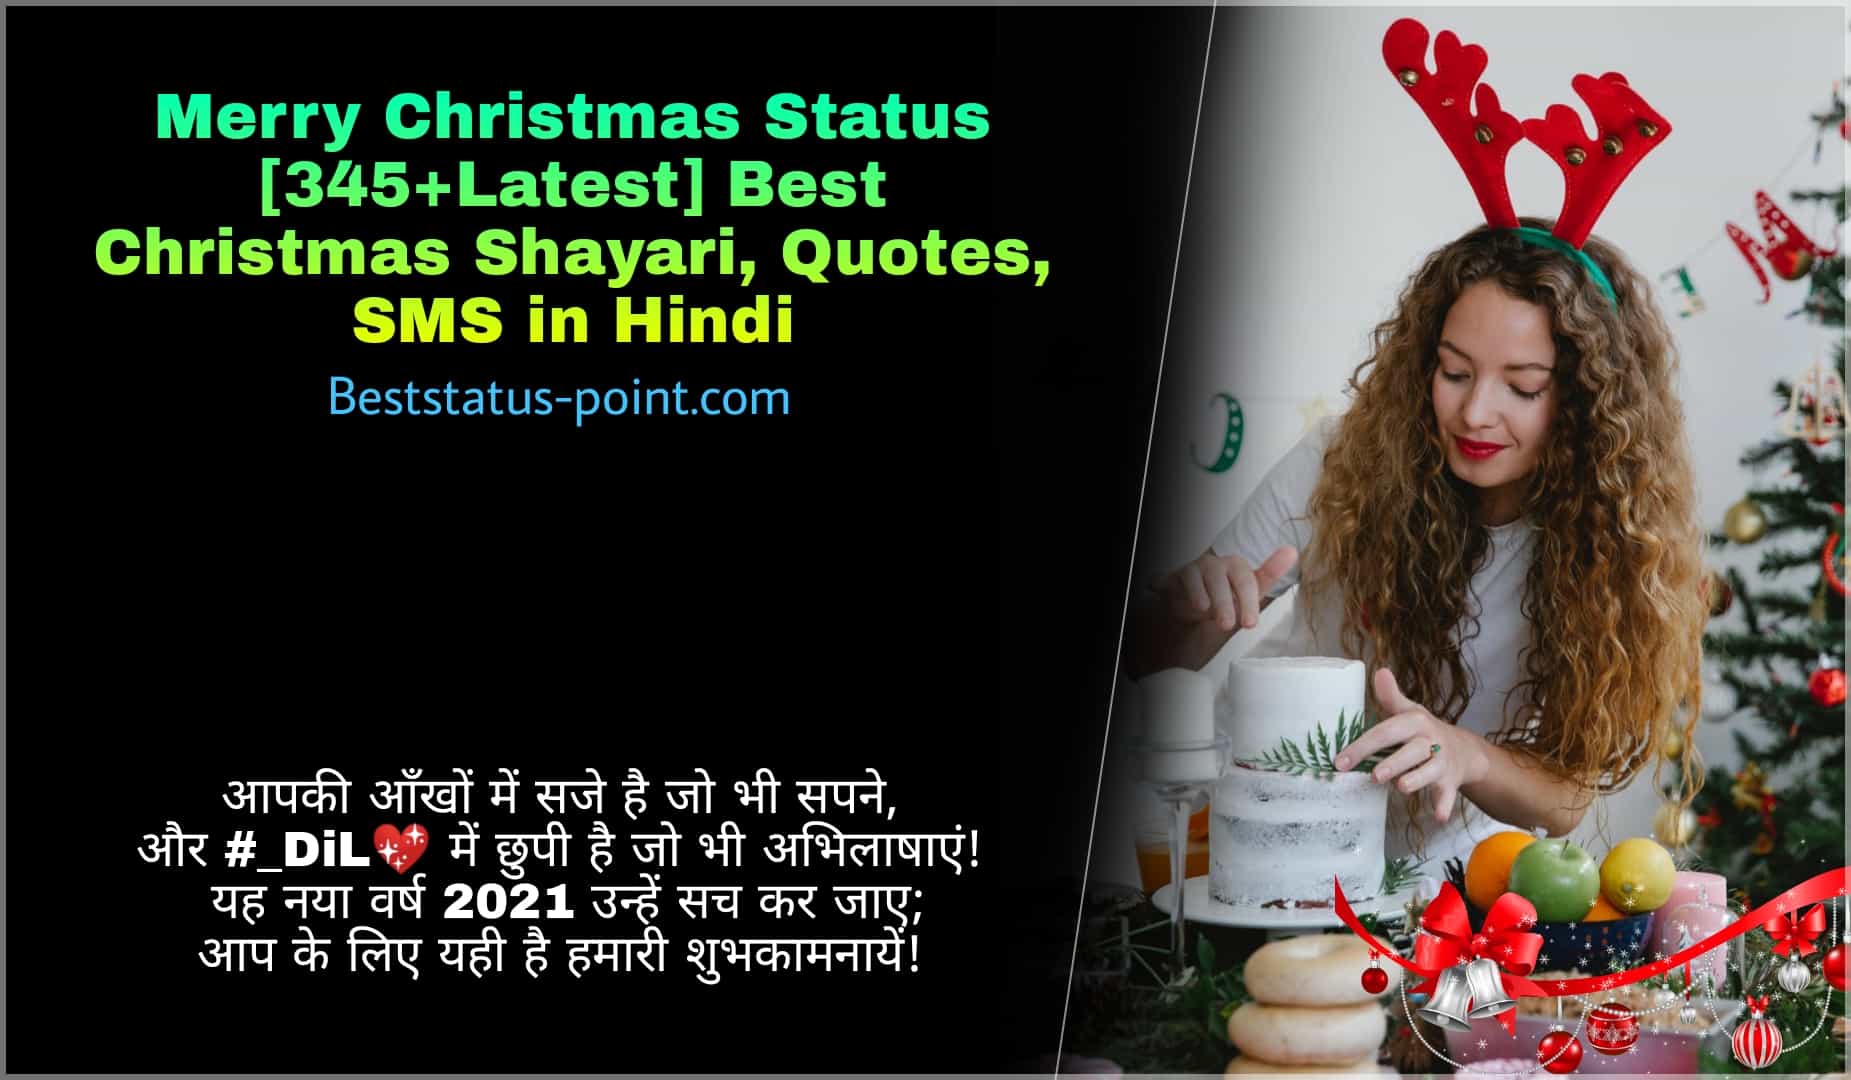 Best Christmas Shayari, Quotes, SMS in Hindi